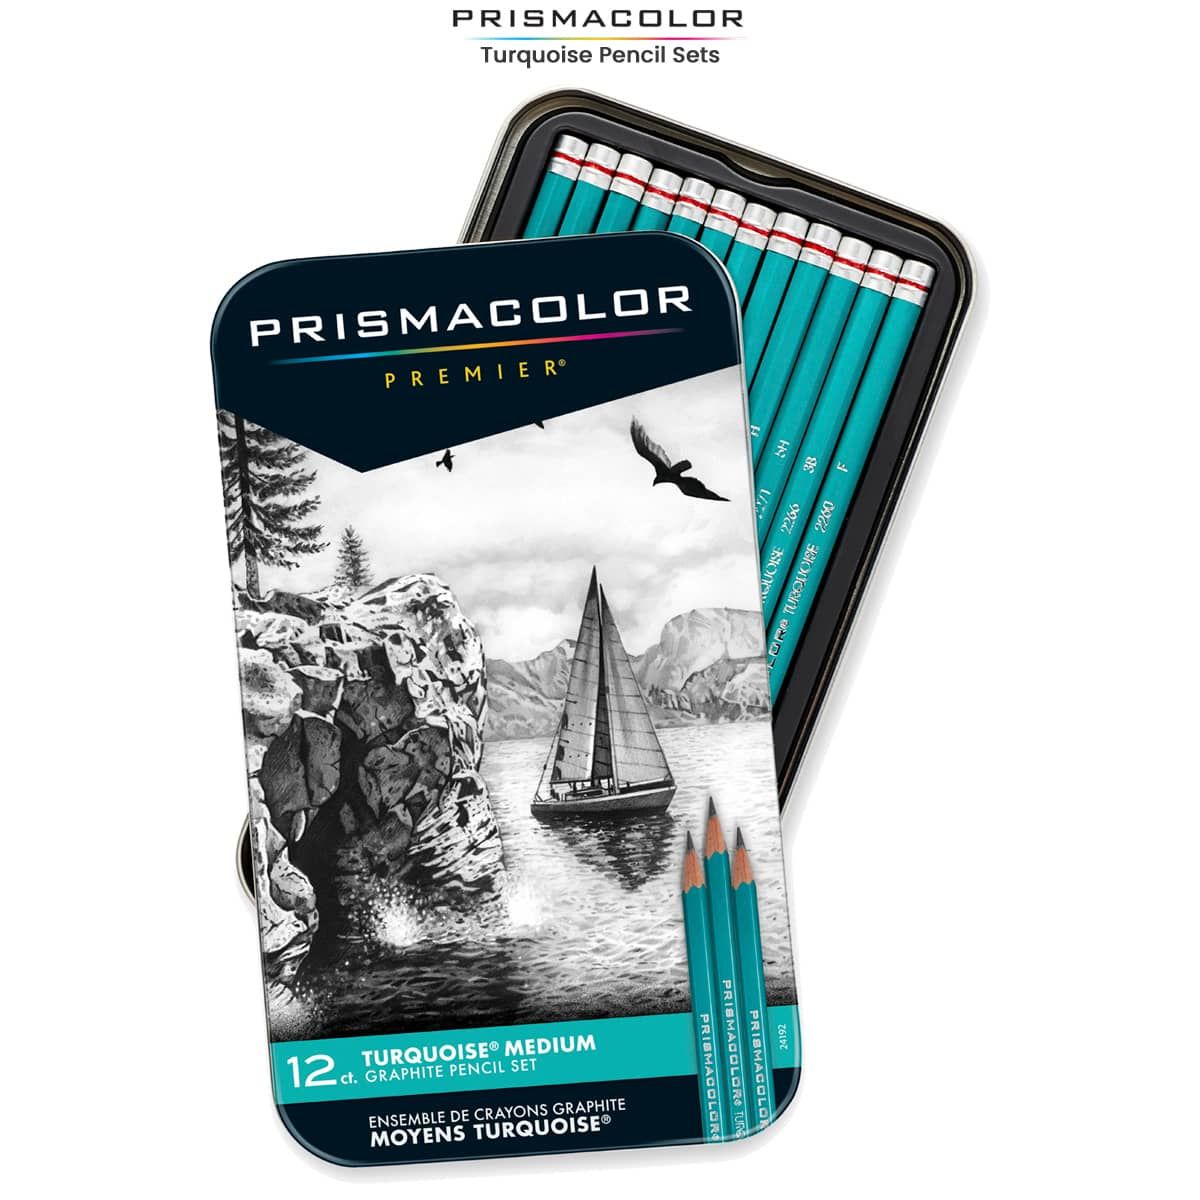 https://www.jerrysartarama.com/media/catalog/product/cache/ecb49a32eeb5603594b082bd5fe65733/p/r/prismacolor-turquoise-pencil-sets-main_1.jpg